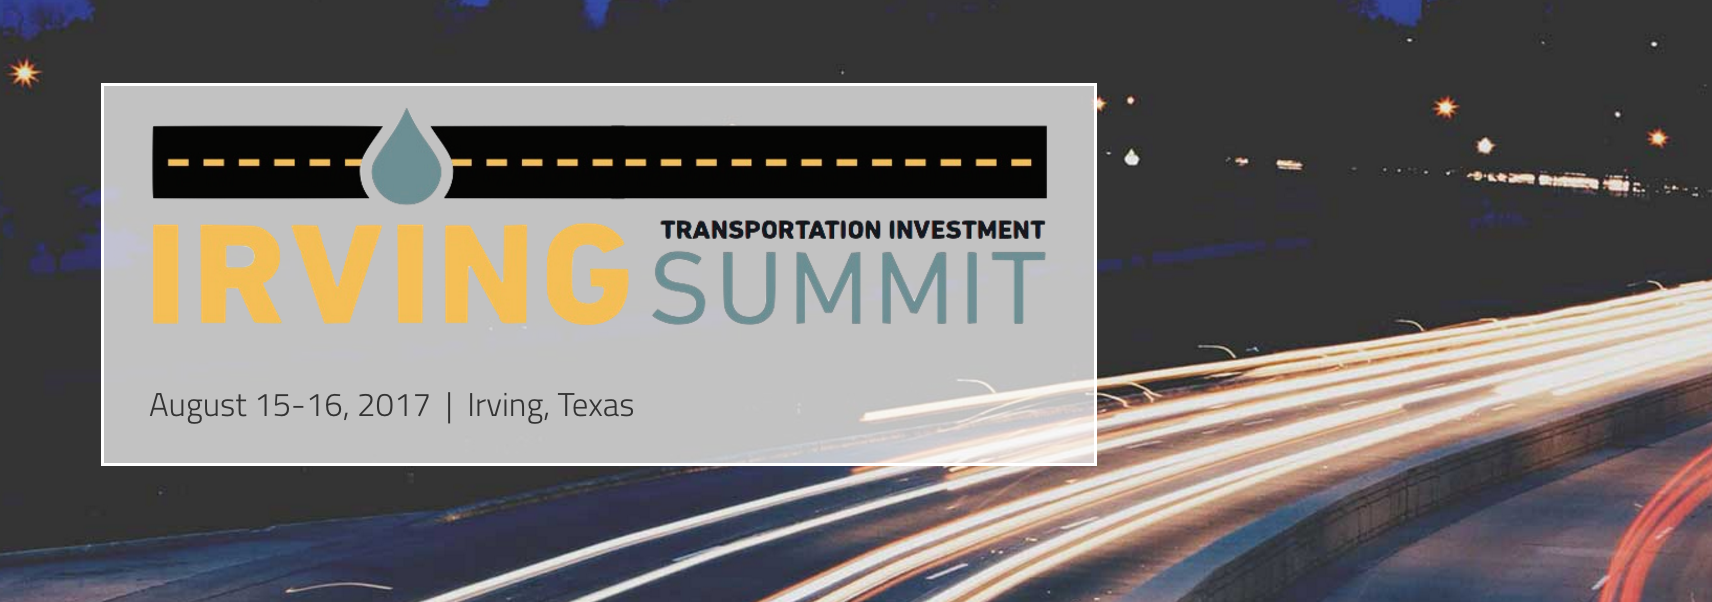 The Transportation Investment Summit